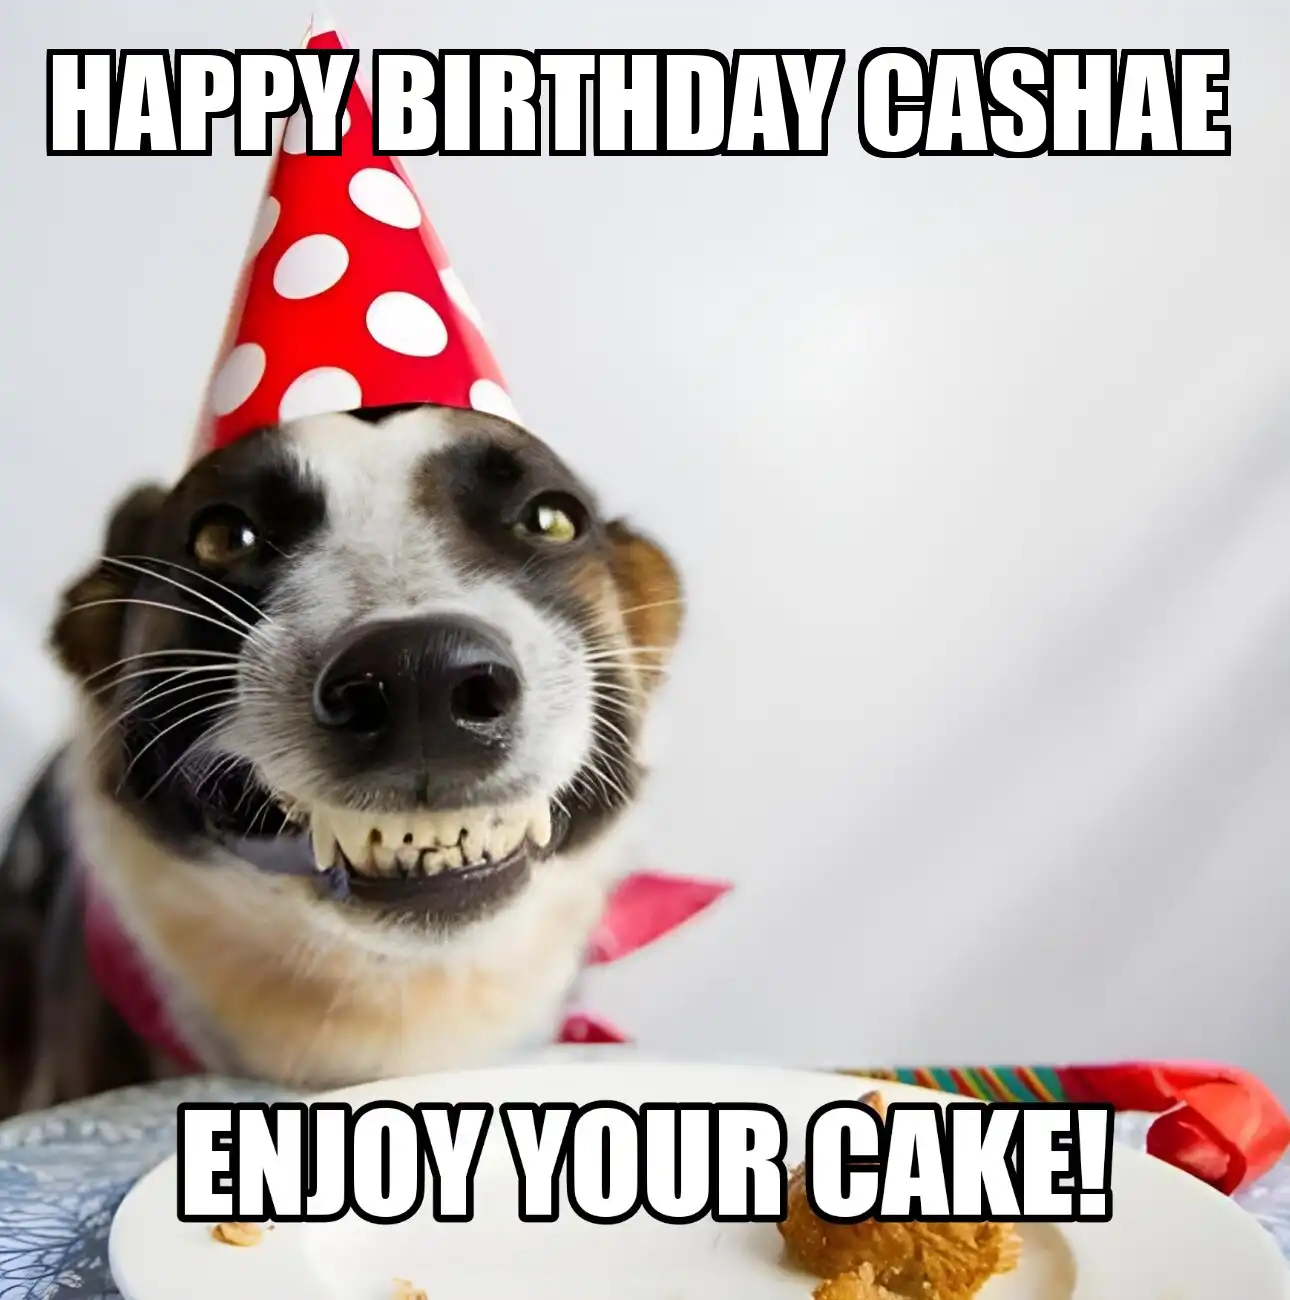 Happy Birthday Cashae Enjoy Your Cake Dog Meme